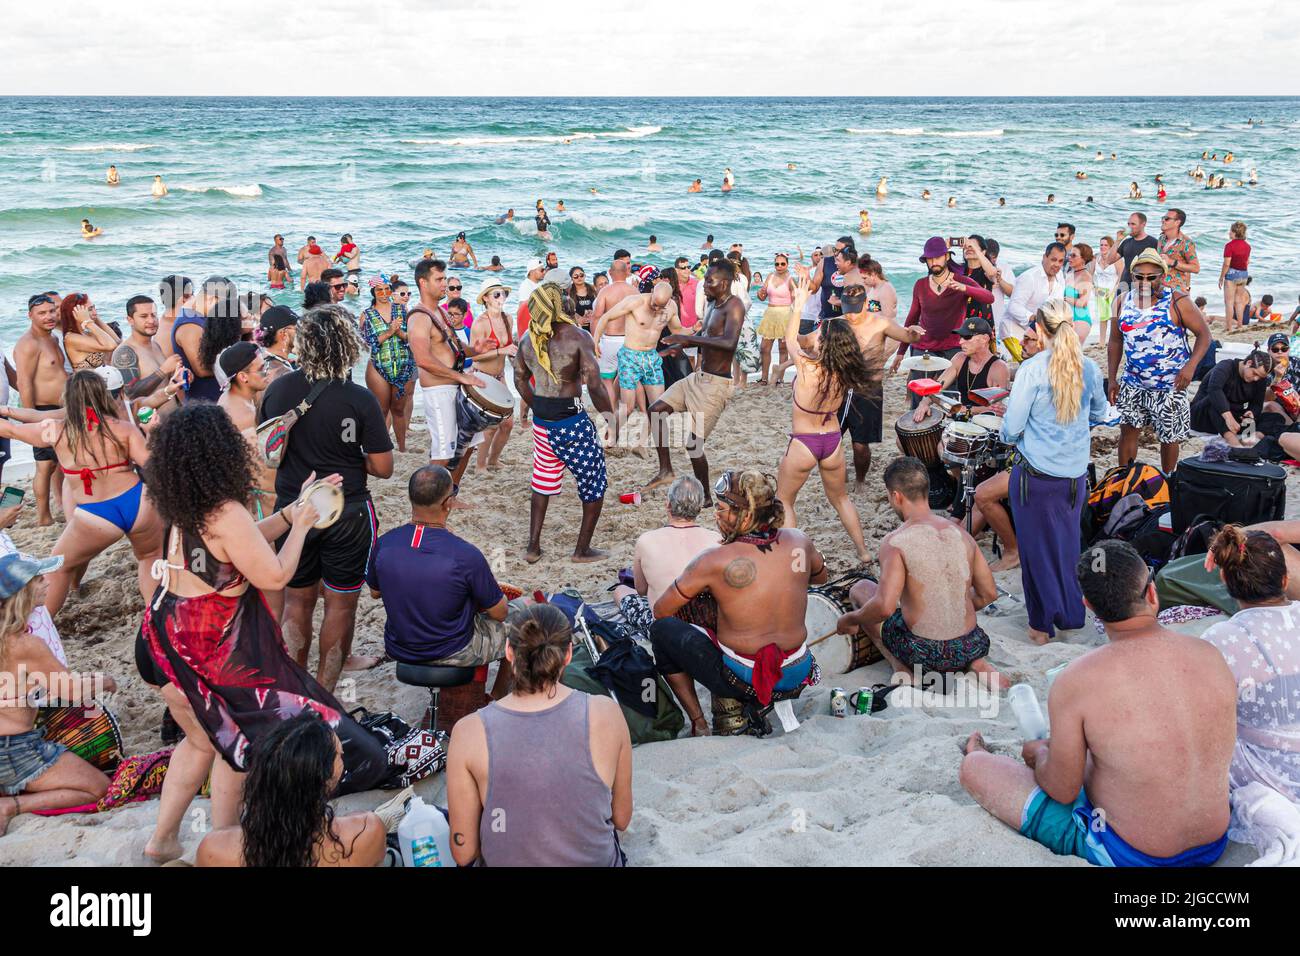 Miami Beach Florida,North Beach people sunbathers Hispanic men women families,Atlantic Ocean public beach drum circle dancers dancing people watching Stock Photo